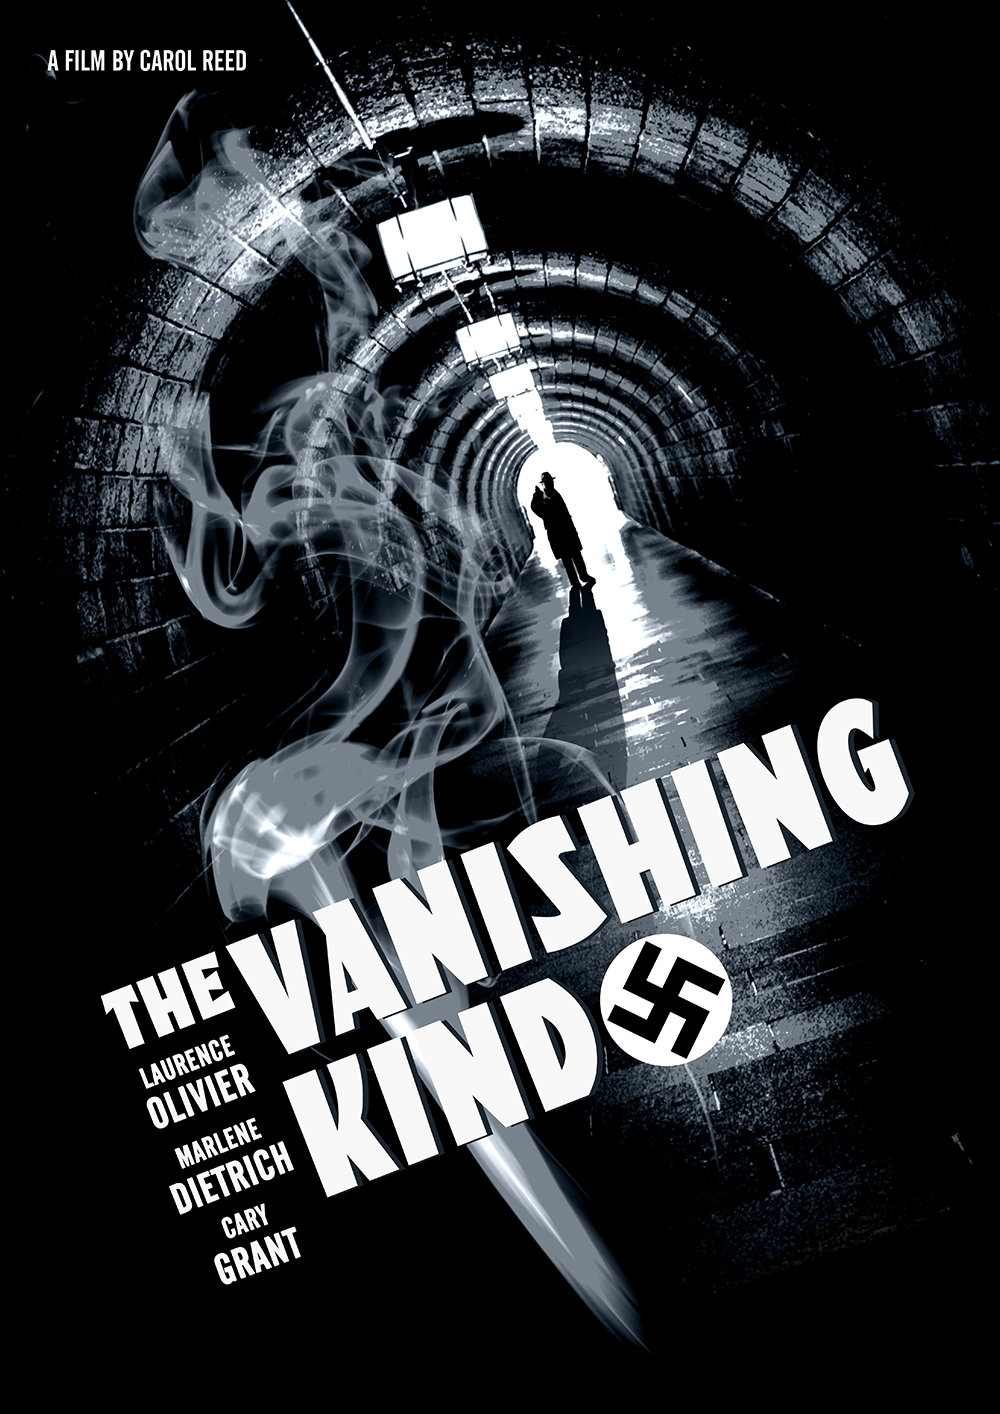 The Vanishing Kind by Lavie Tidhar